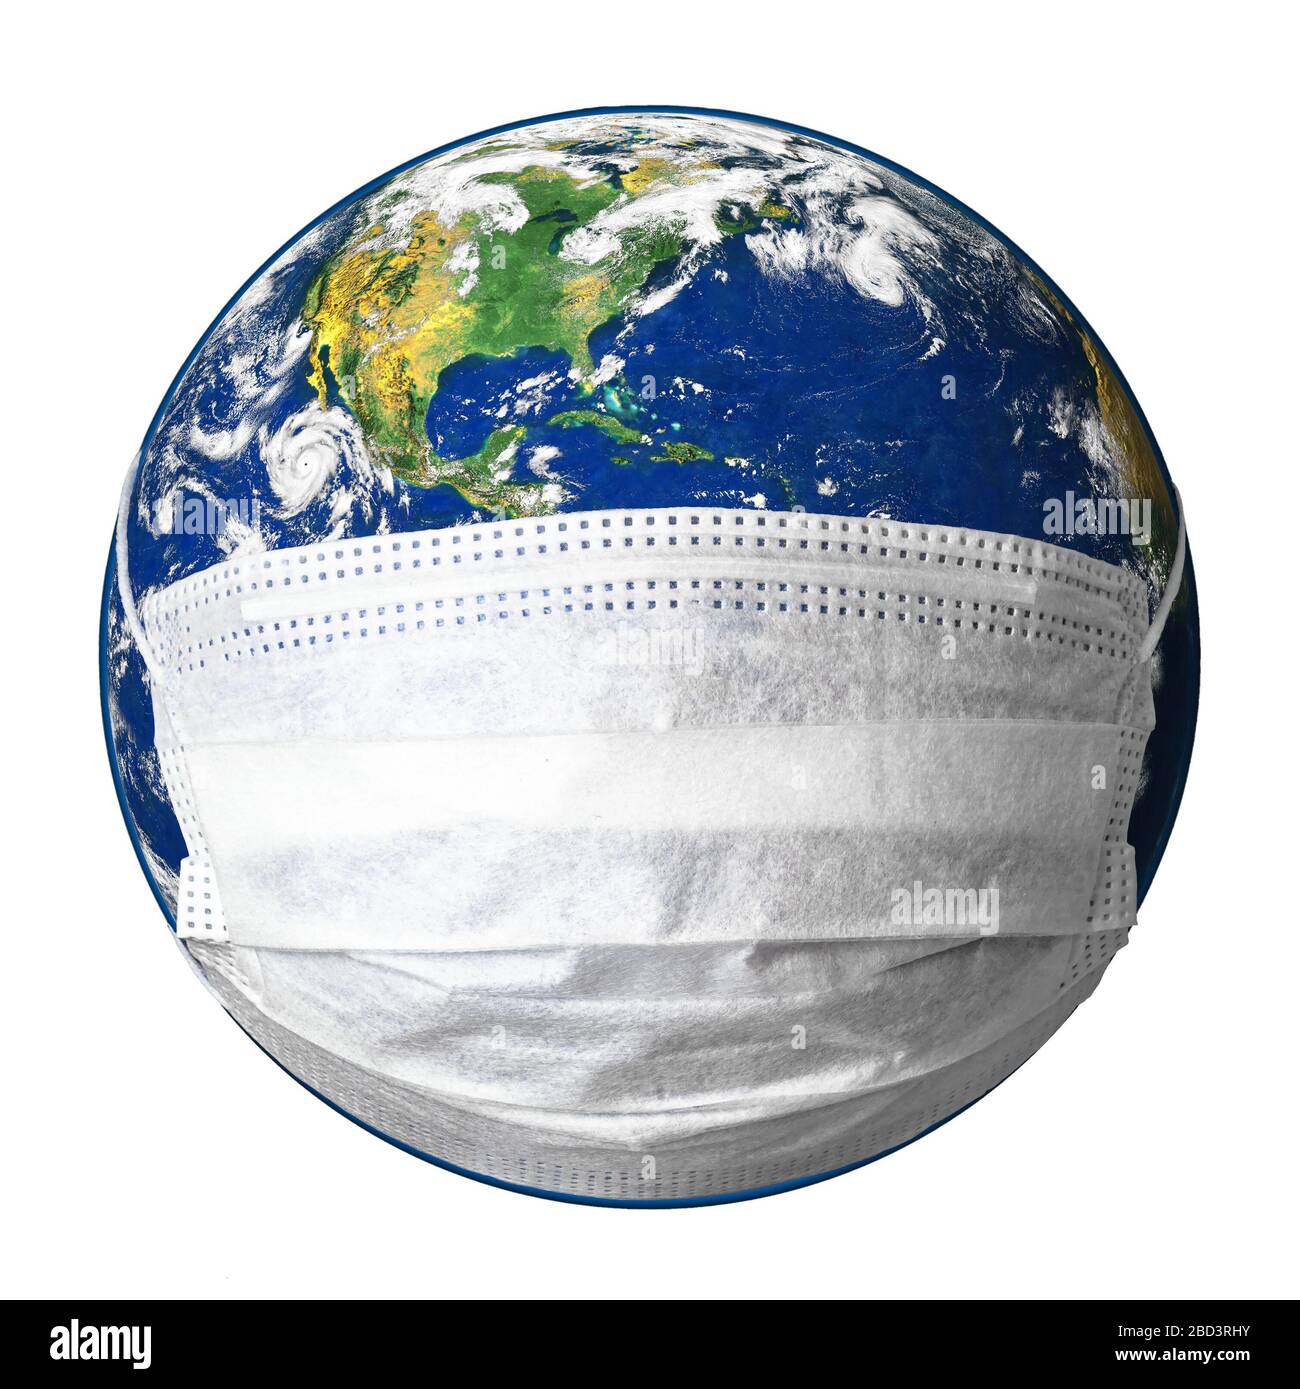 The Earth Wearing A Mask World Pandemic Lockdown Decorative Magnet Without a Bail Covid-19 Coronavirus Corona Virus 